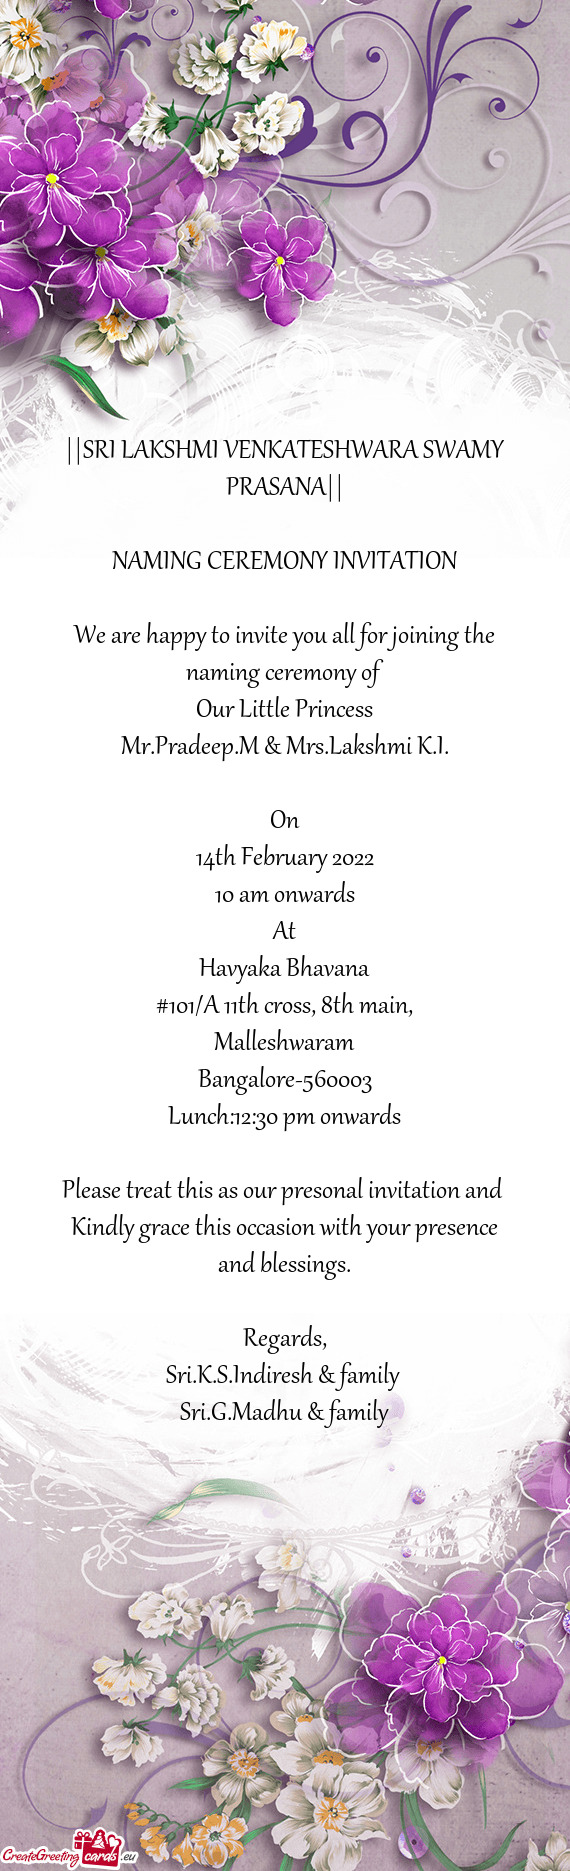 Mr.Pradeep.M & Mrs.Lakshmi K.I